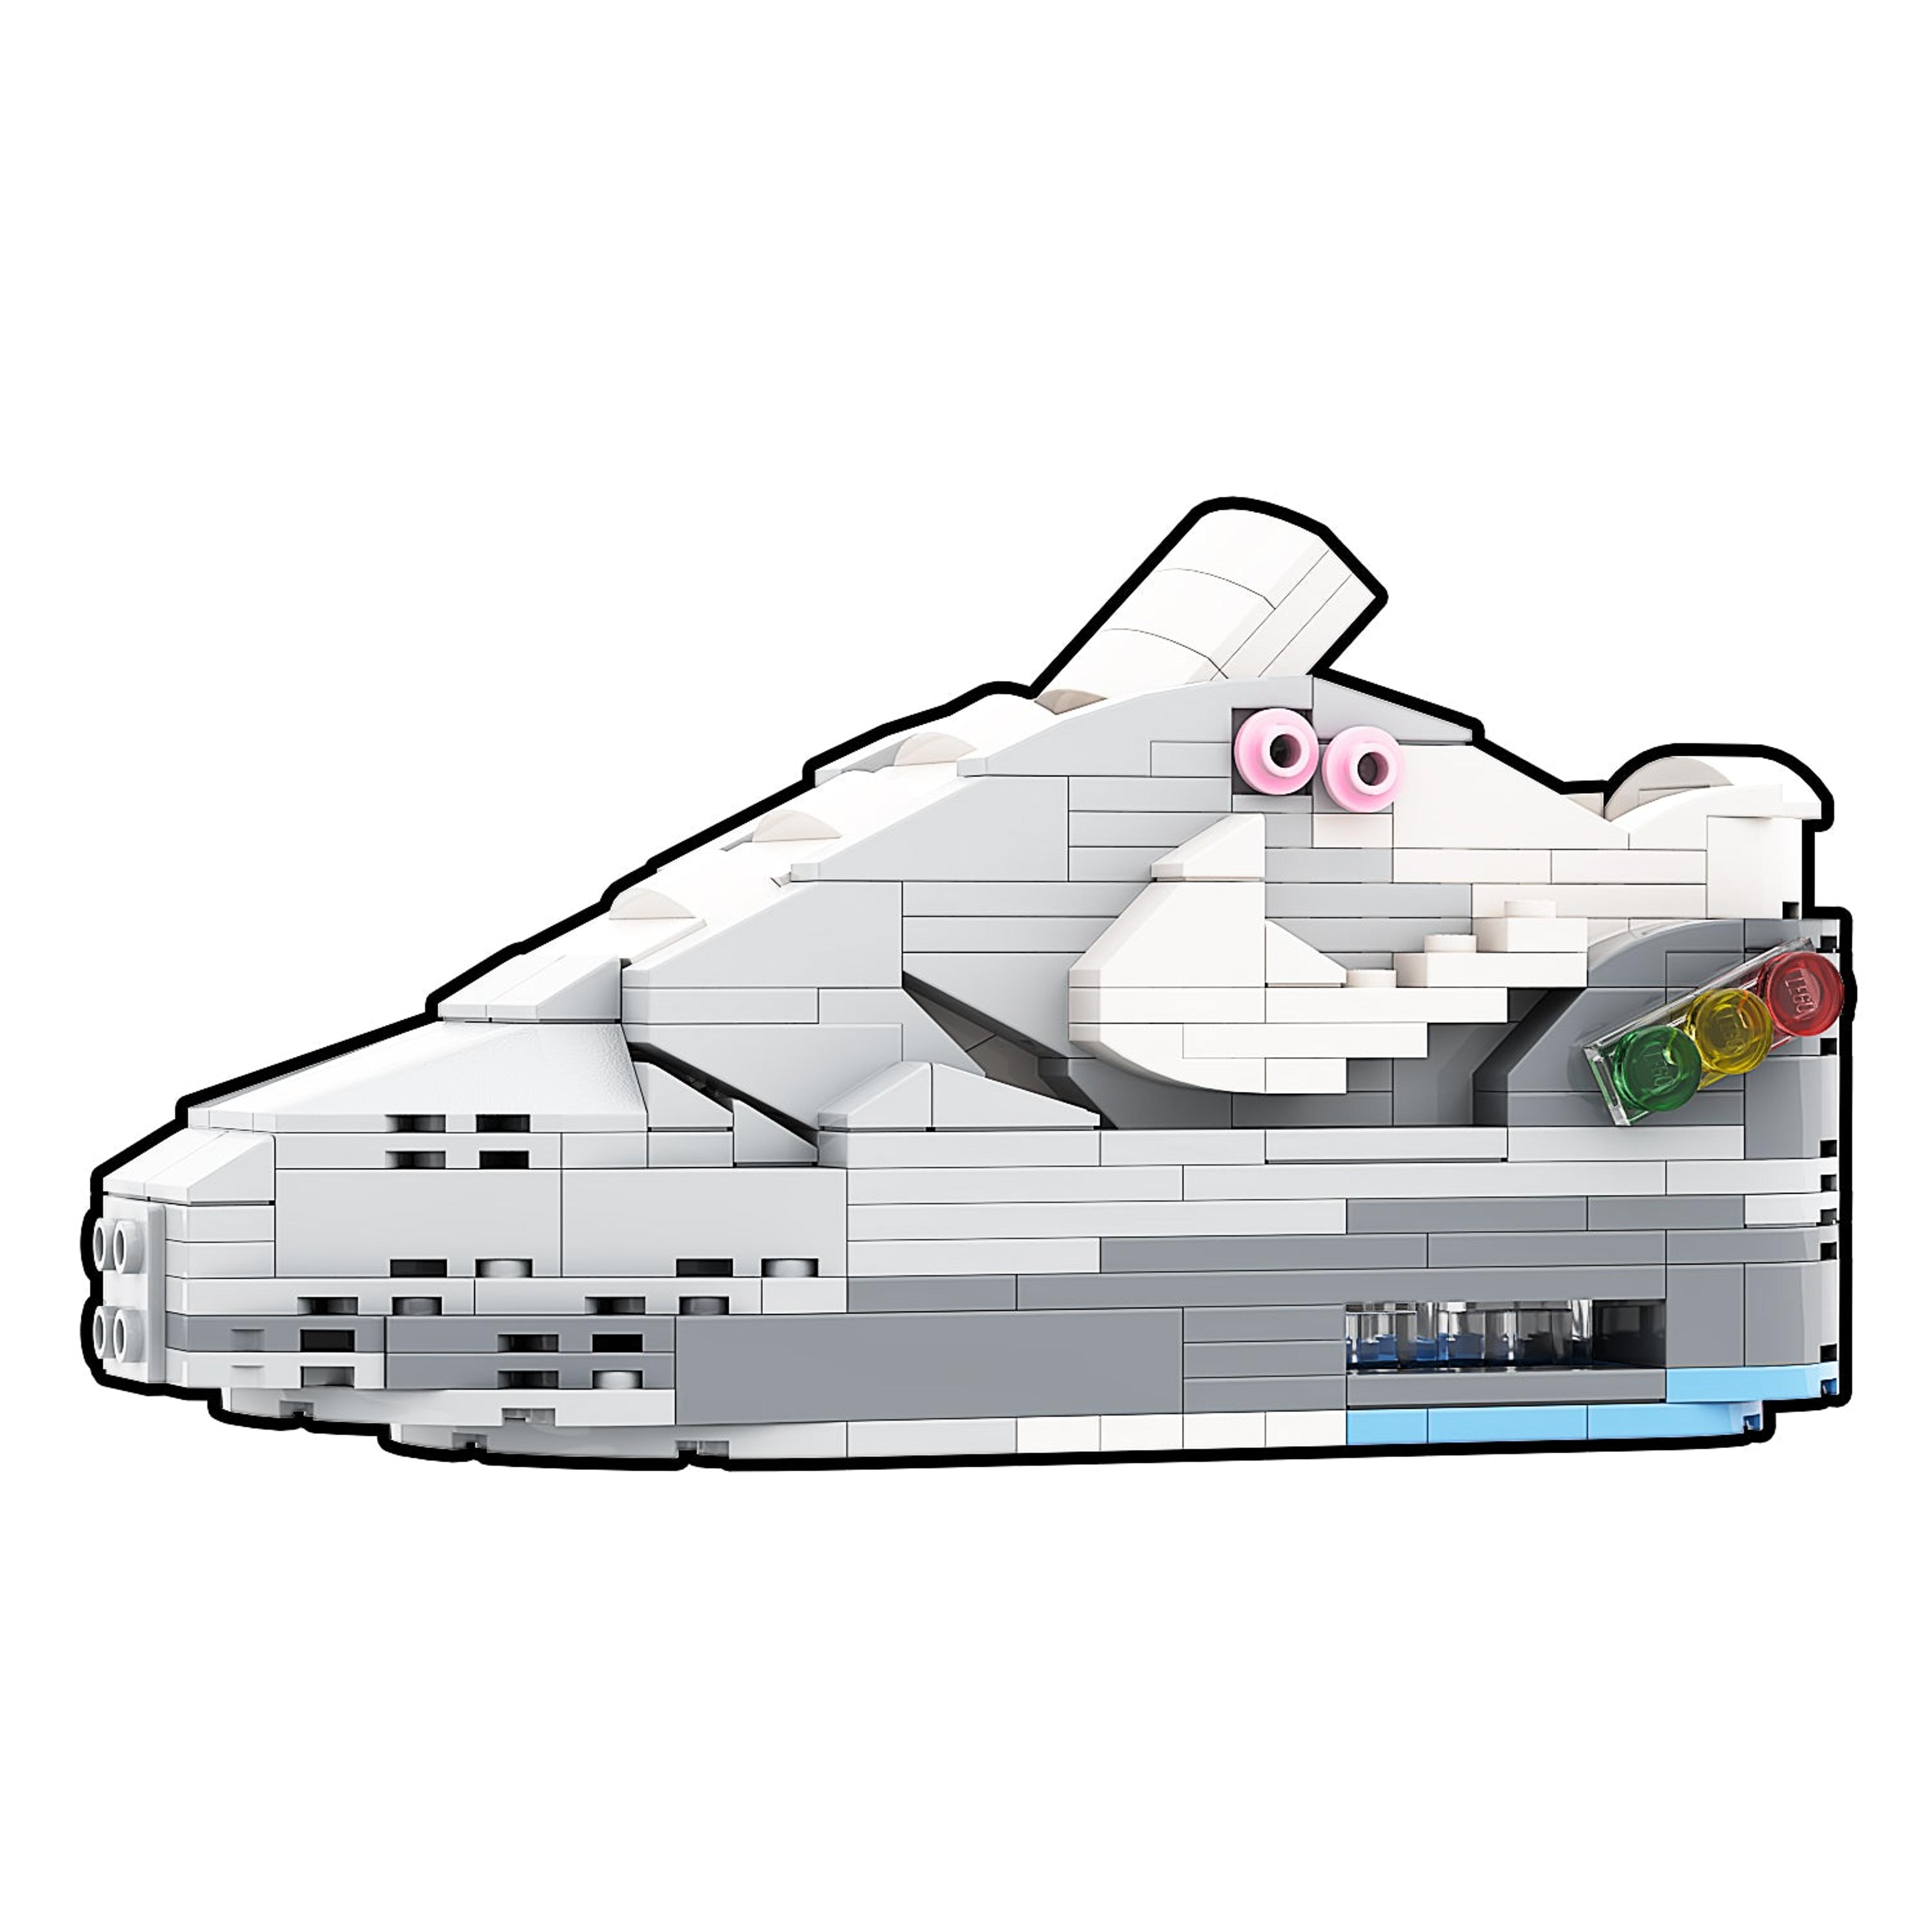 Alternate View 11 of REGULAR Air Max 1 "Mags MOC" Sneaker Bricks with Mini Figure